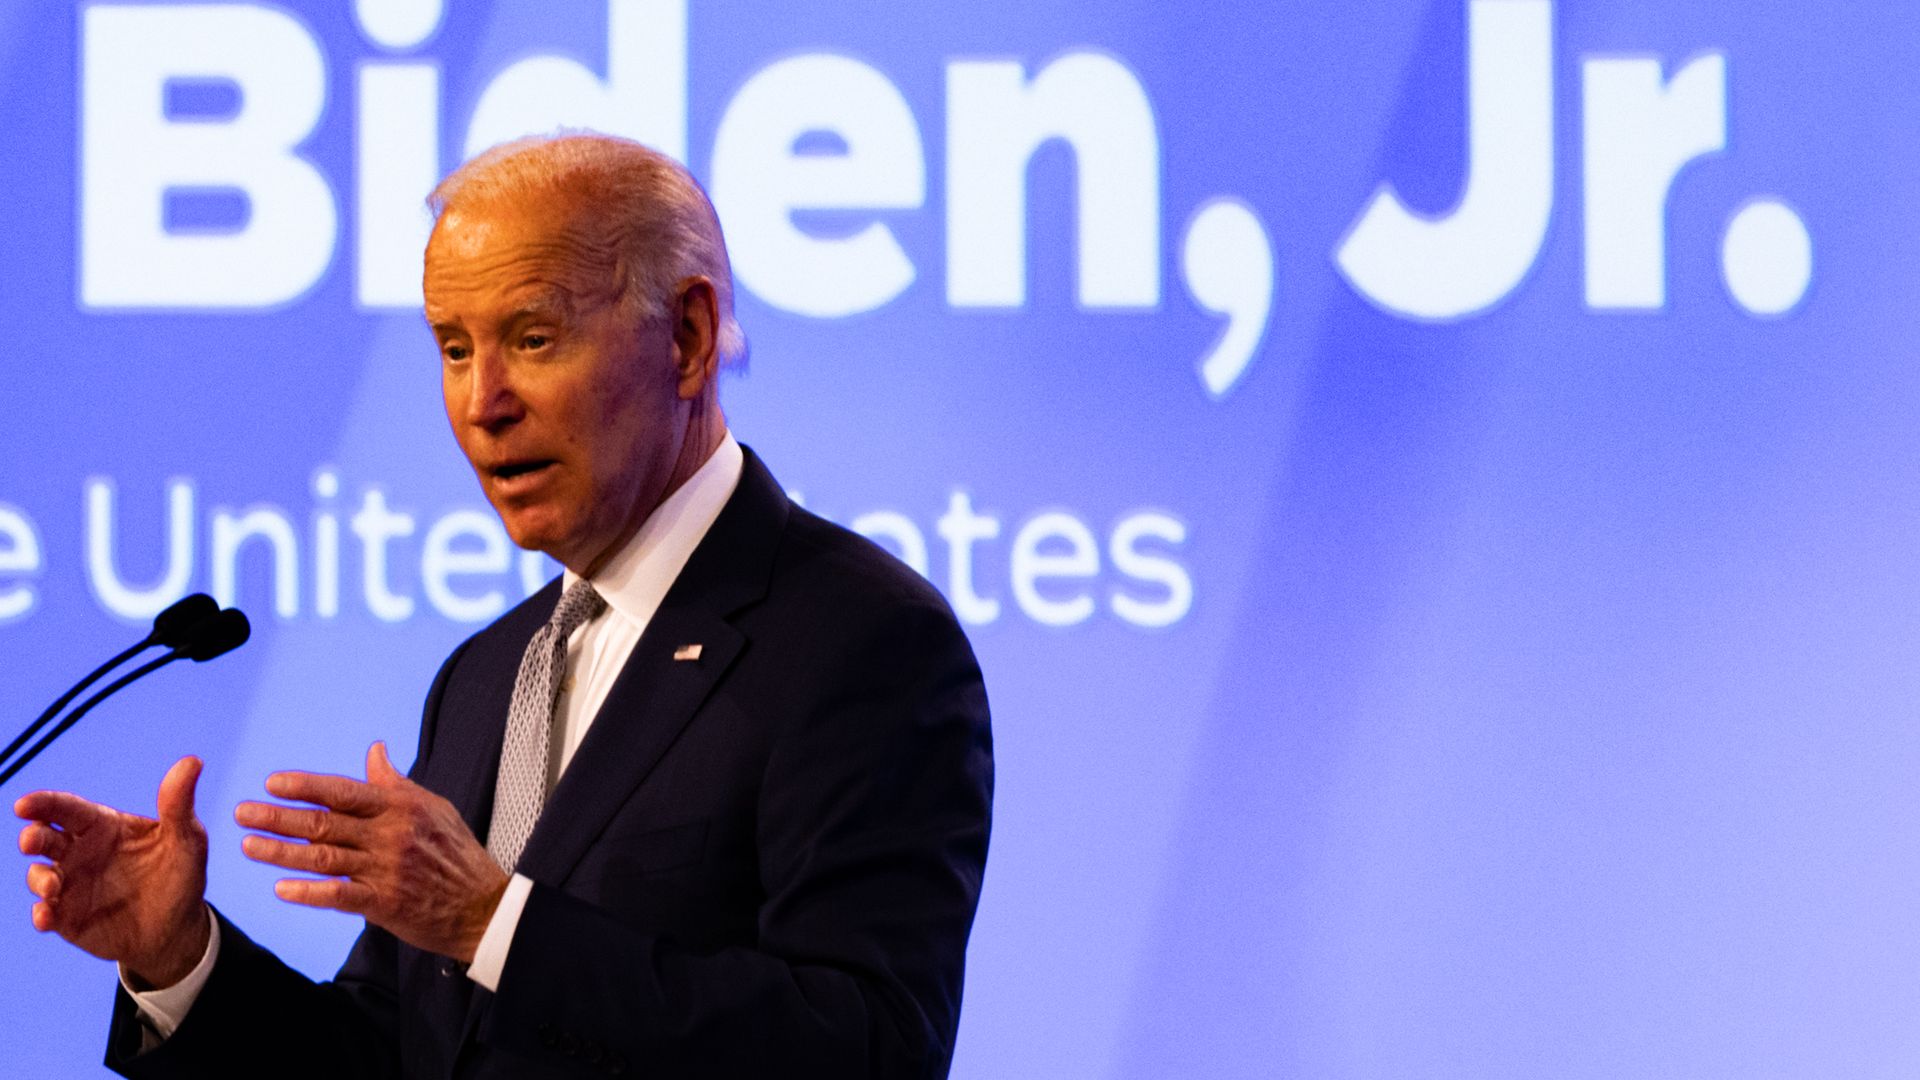 U.S. President Joe Biden delivers remarks at the 29th AFL-CIO Quadrennial Constitutional Convention on June 14, 2022 in Philadelphia, Pennsylvania.